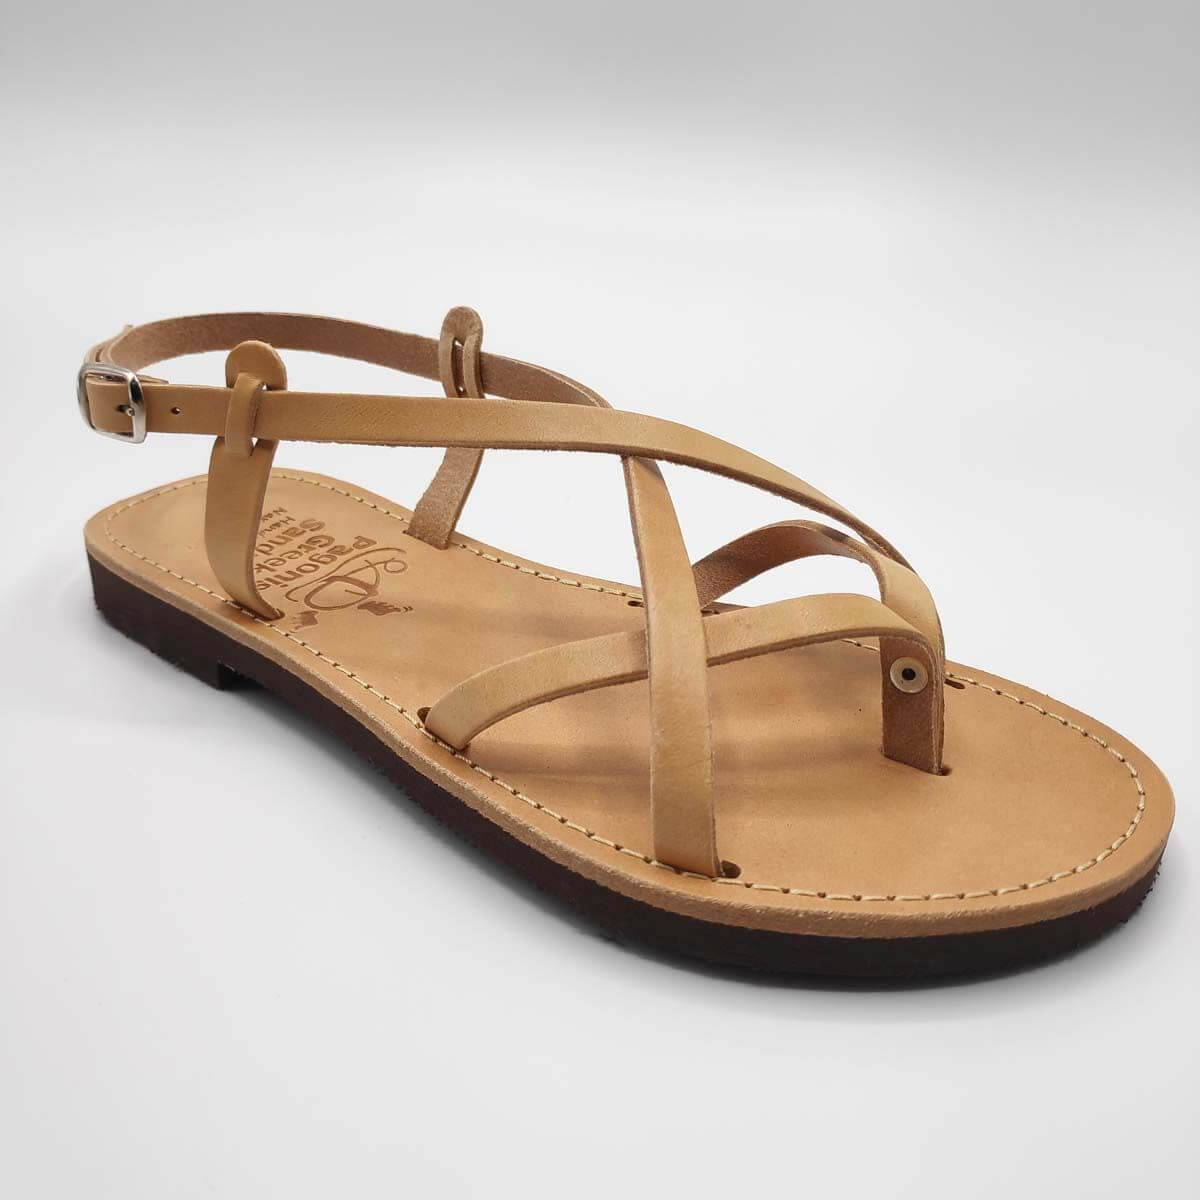 Leather Flip Flop Sandal strappy sandals with toe divider | Pagonis Greek  Sandals